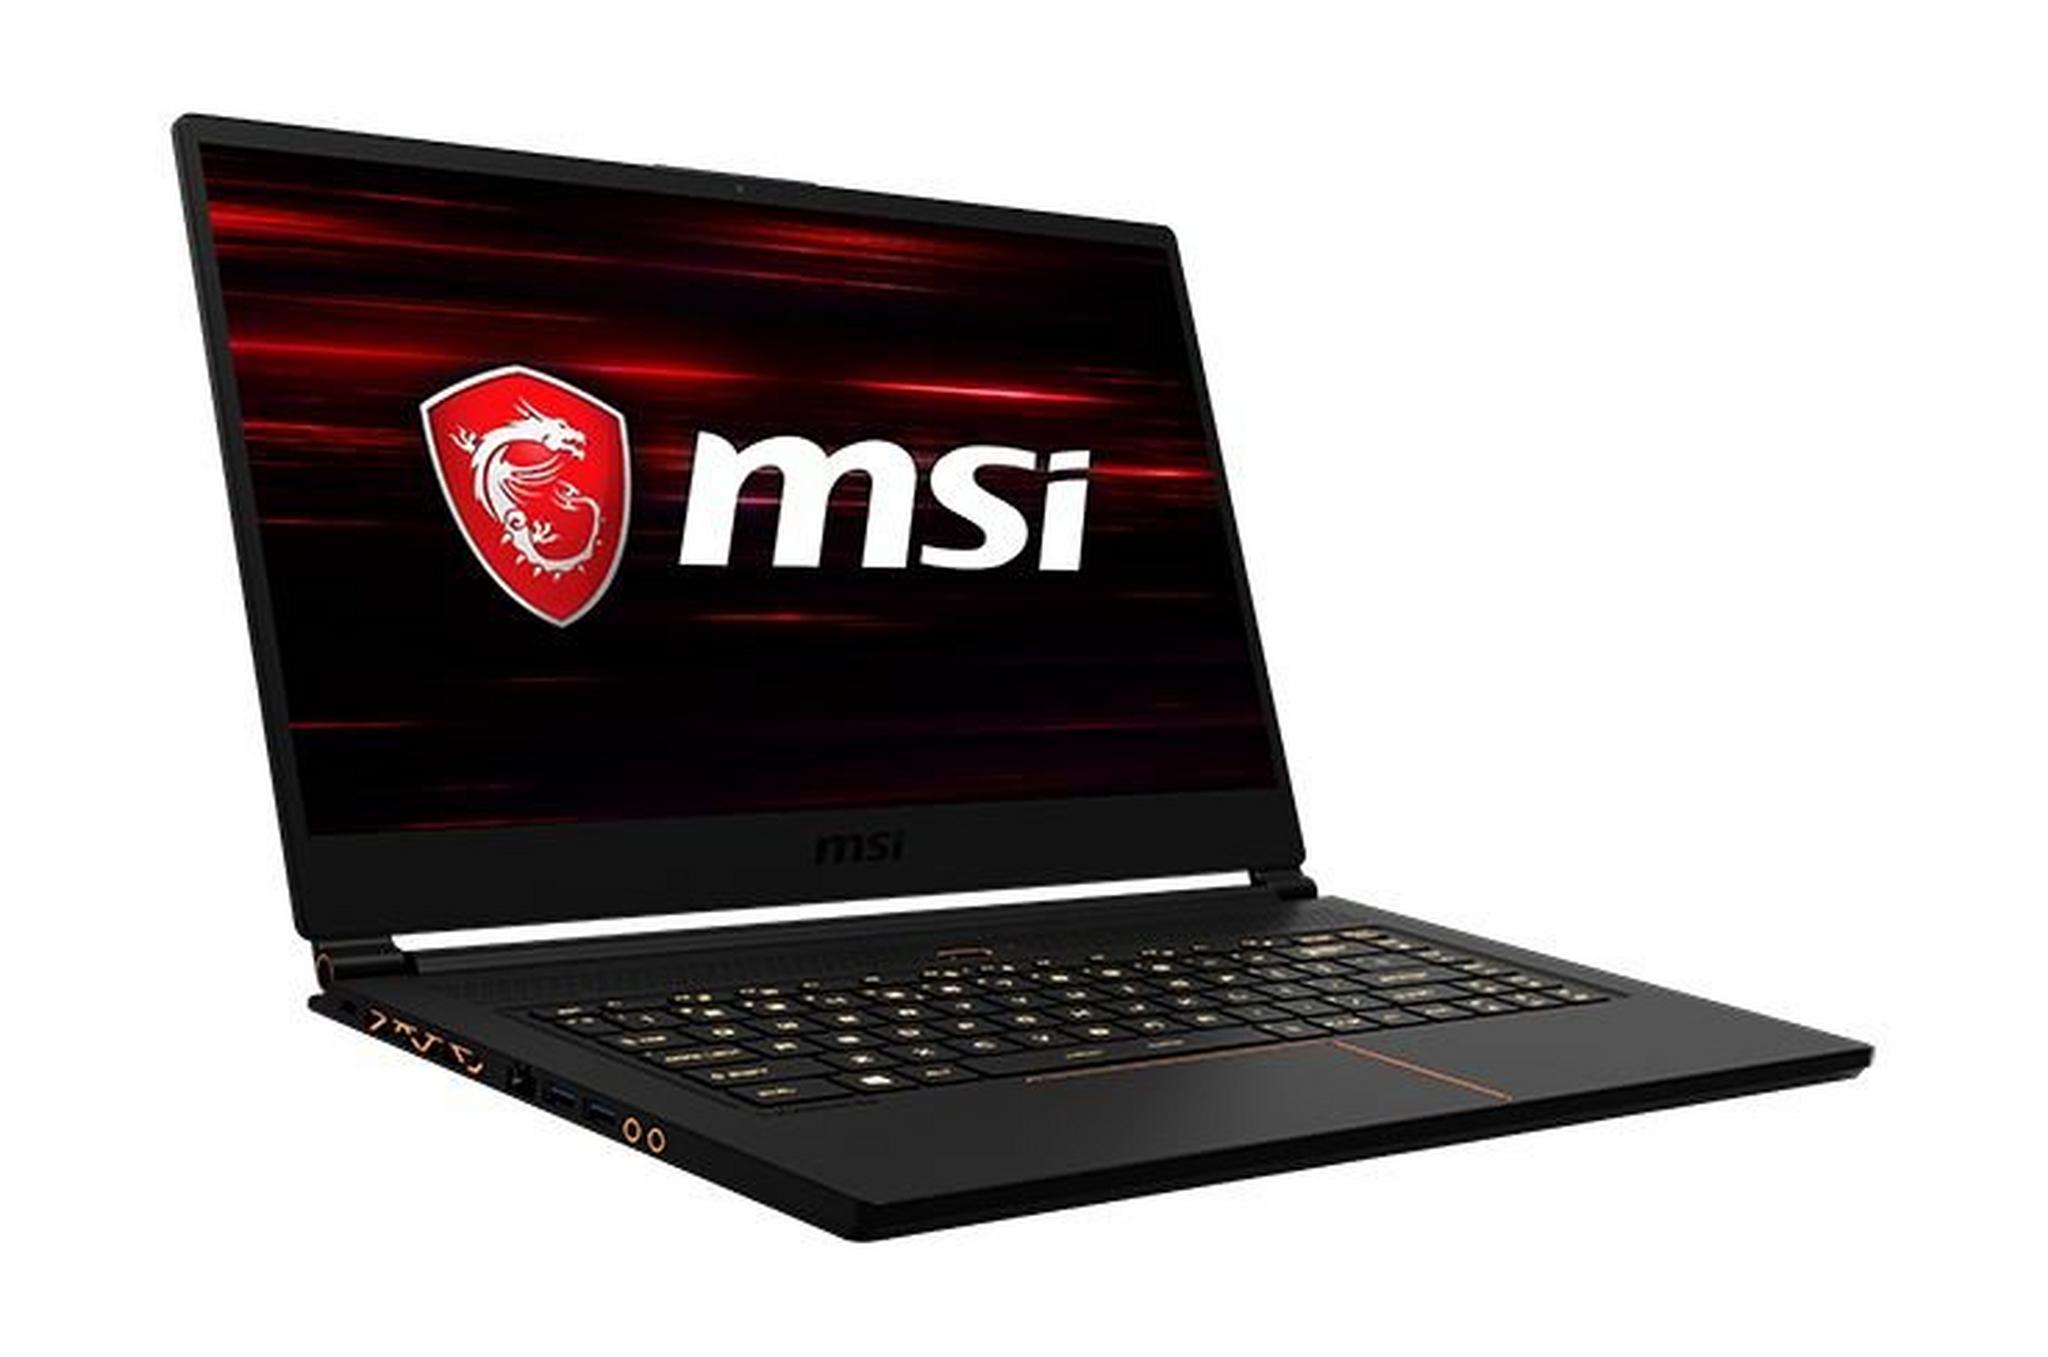 MSI GS65 Stealth 8RF GeForce GTX 1070 8GB Core i7 16GB RAM 512GB SSD 15.6 inch Gaming Laptop